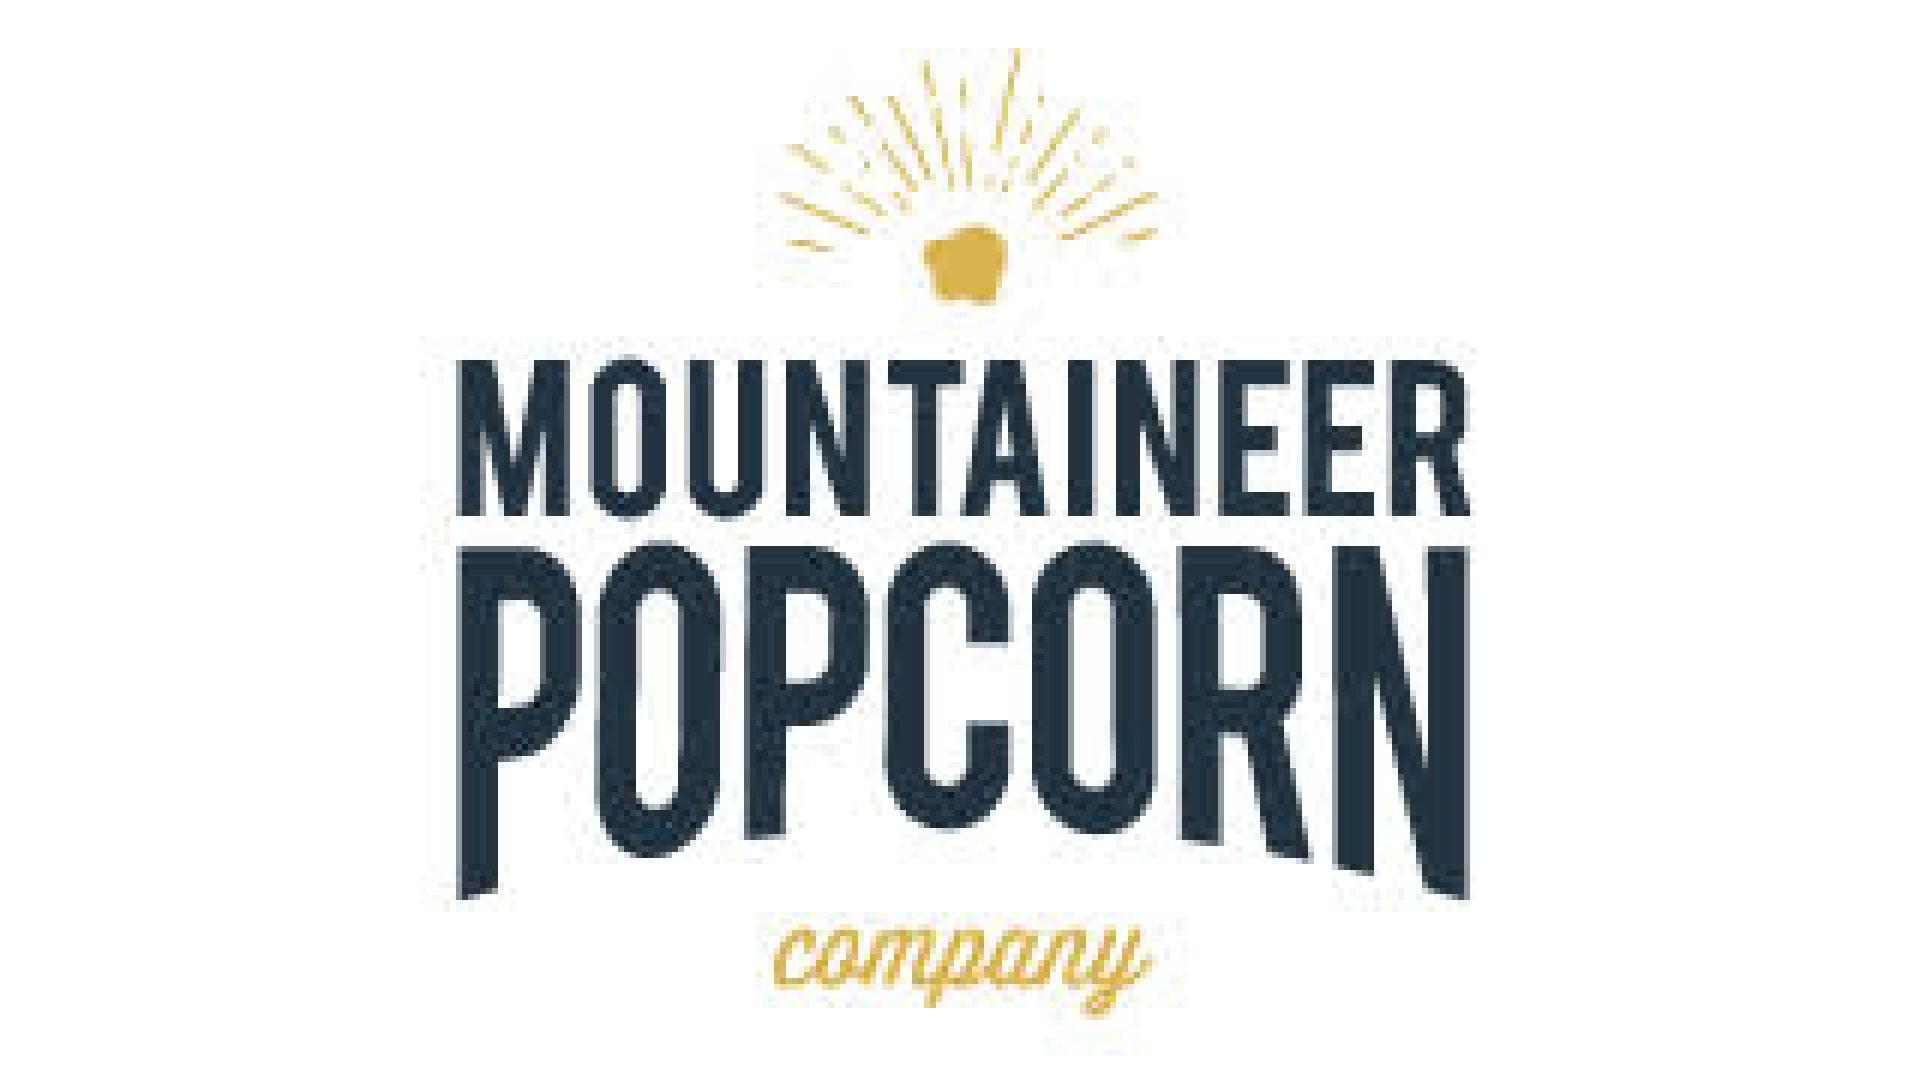 Mountaineer Popcorn